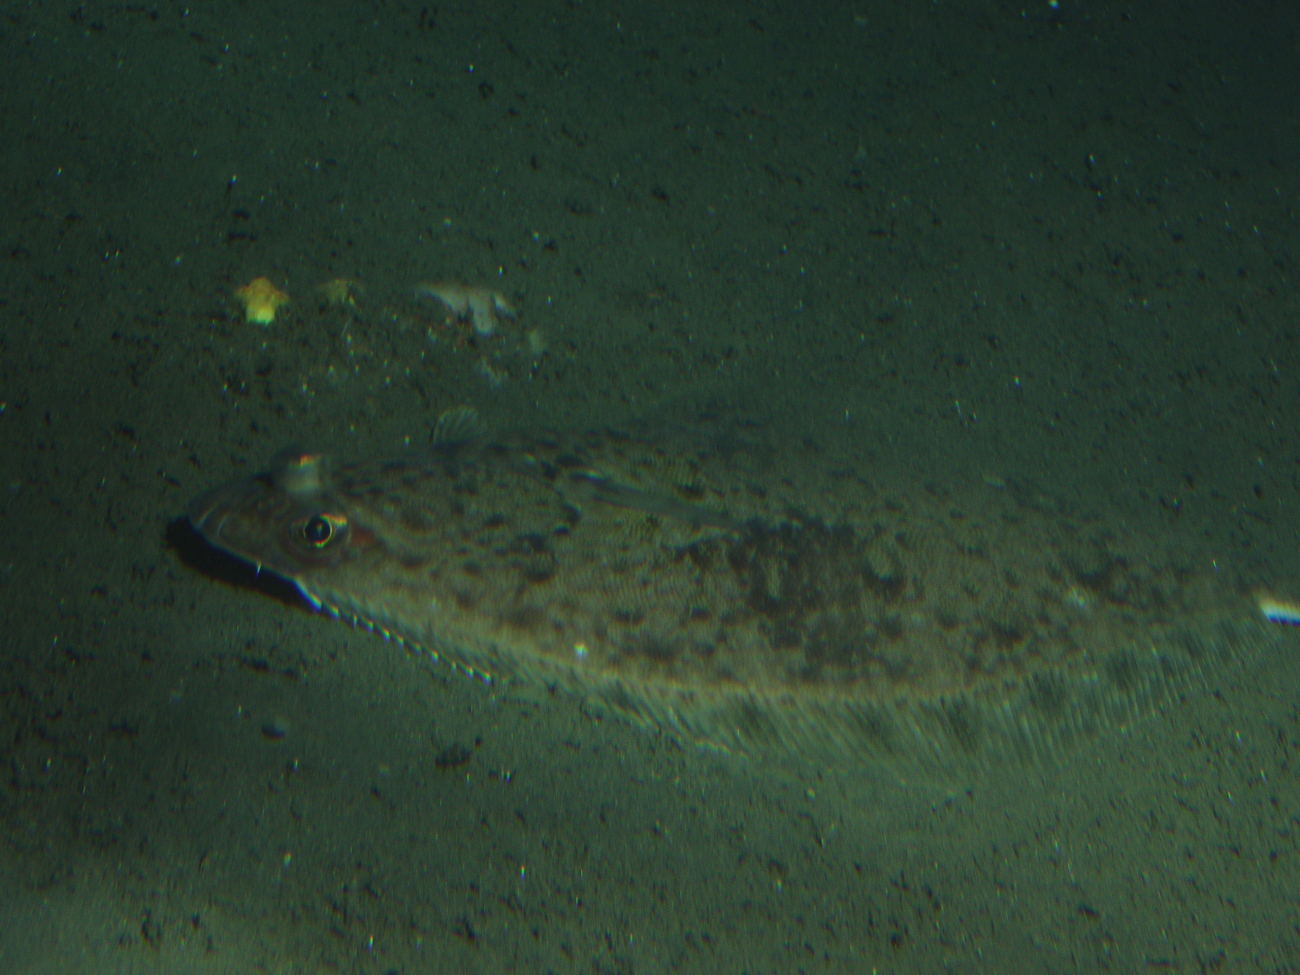 Unidentified flatfish close up in soft bottom habitatat 175 meters depth